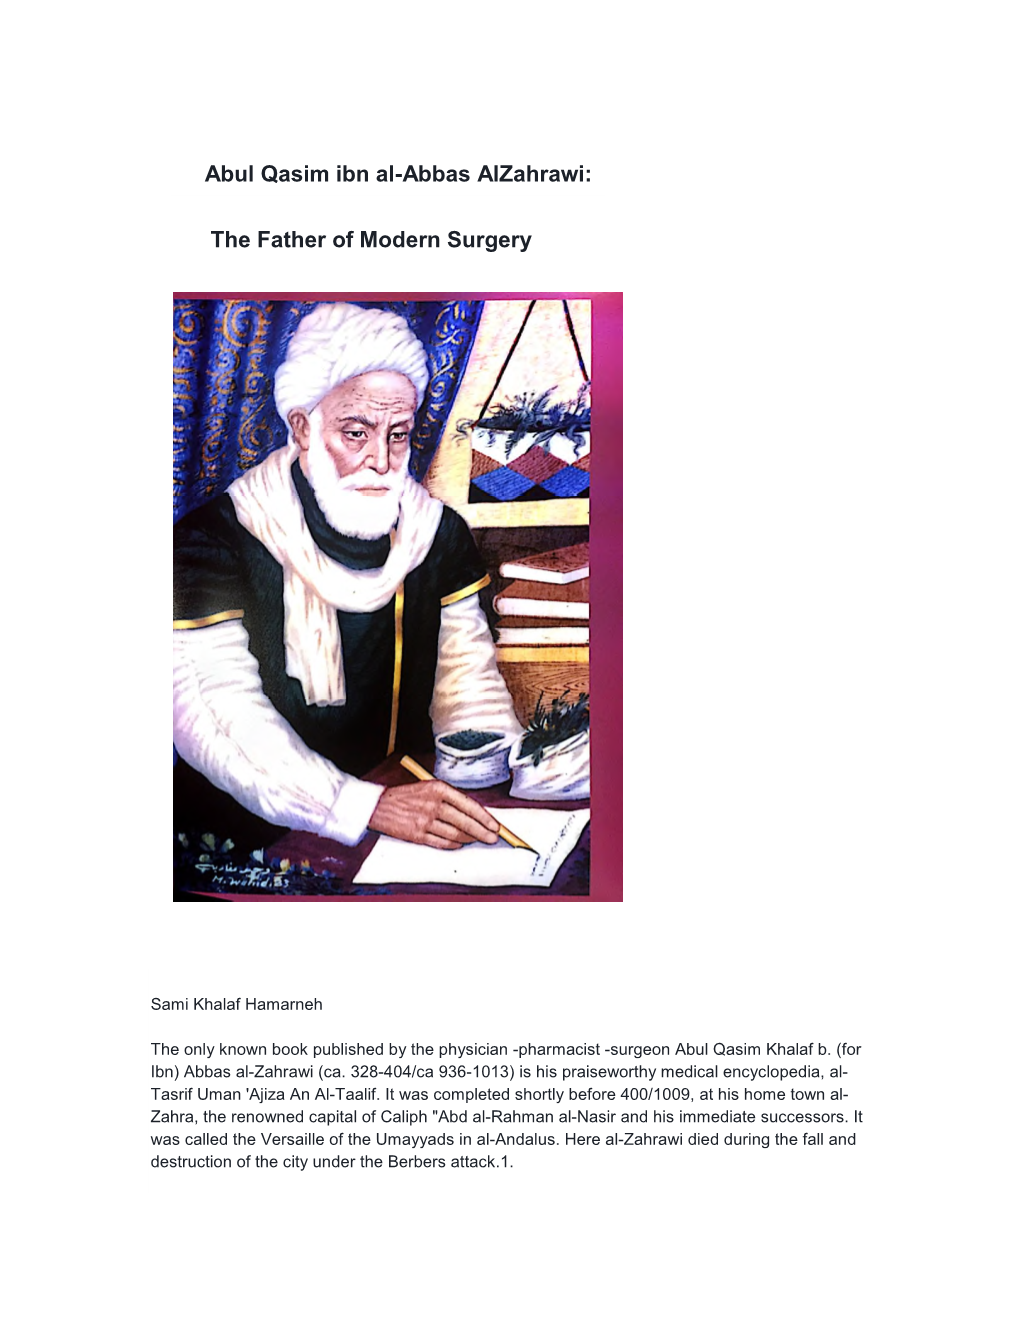 Abul Qasim Ibn Al-Abbas Alzahrawi: the Father of Modern Surgery